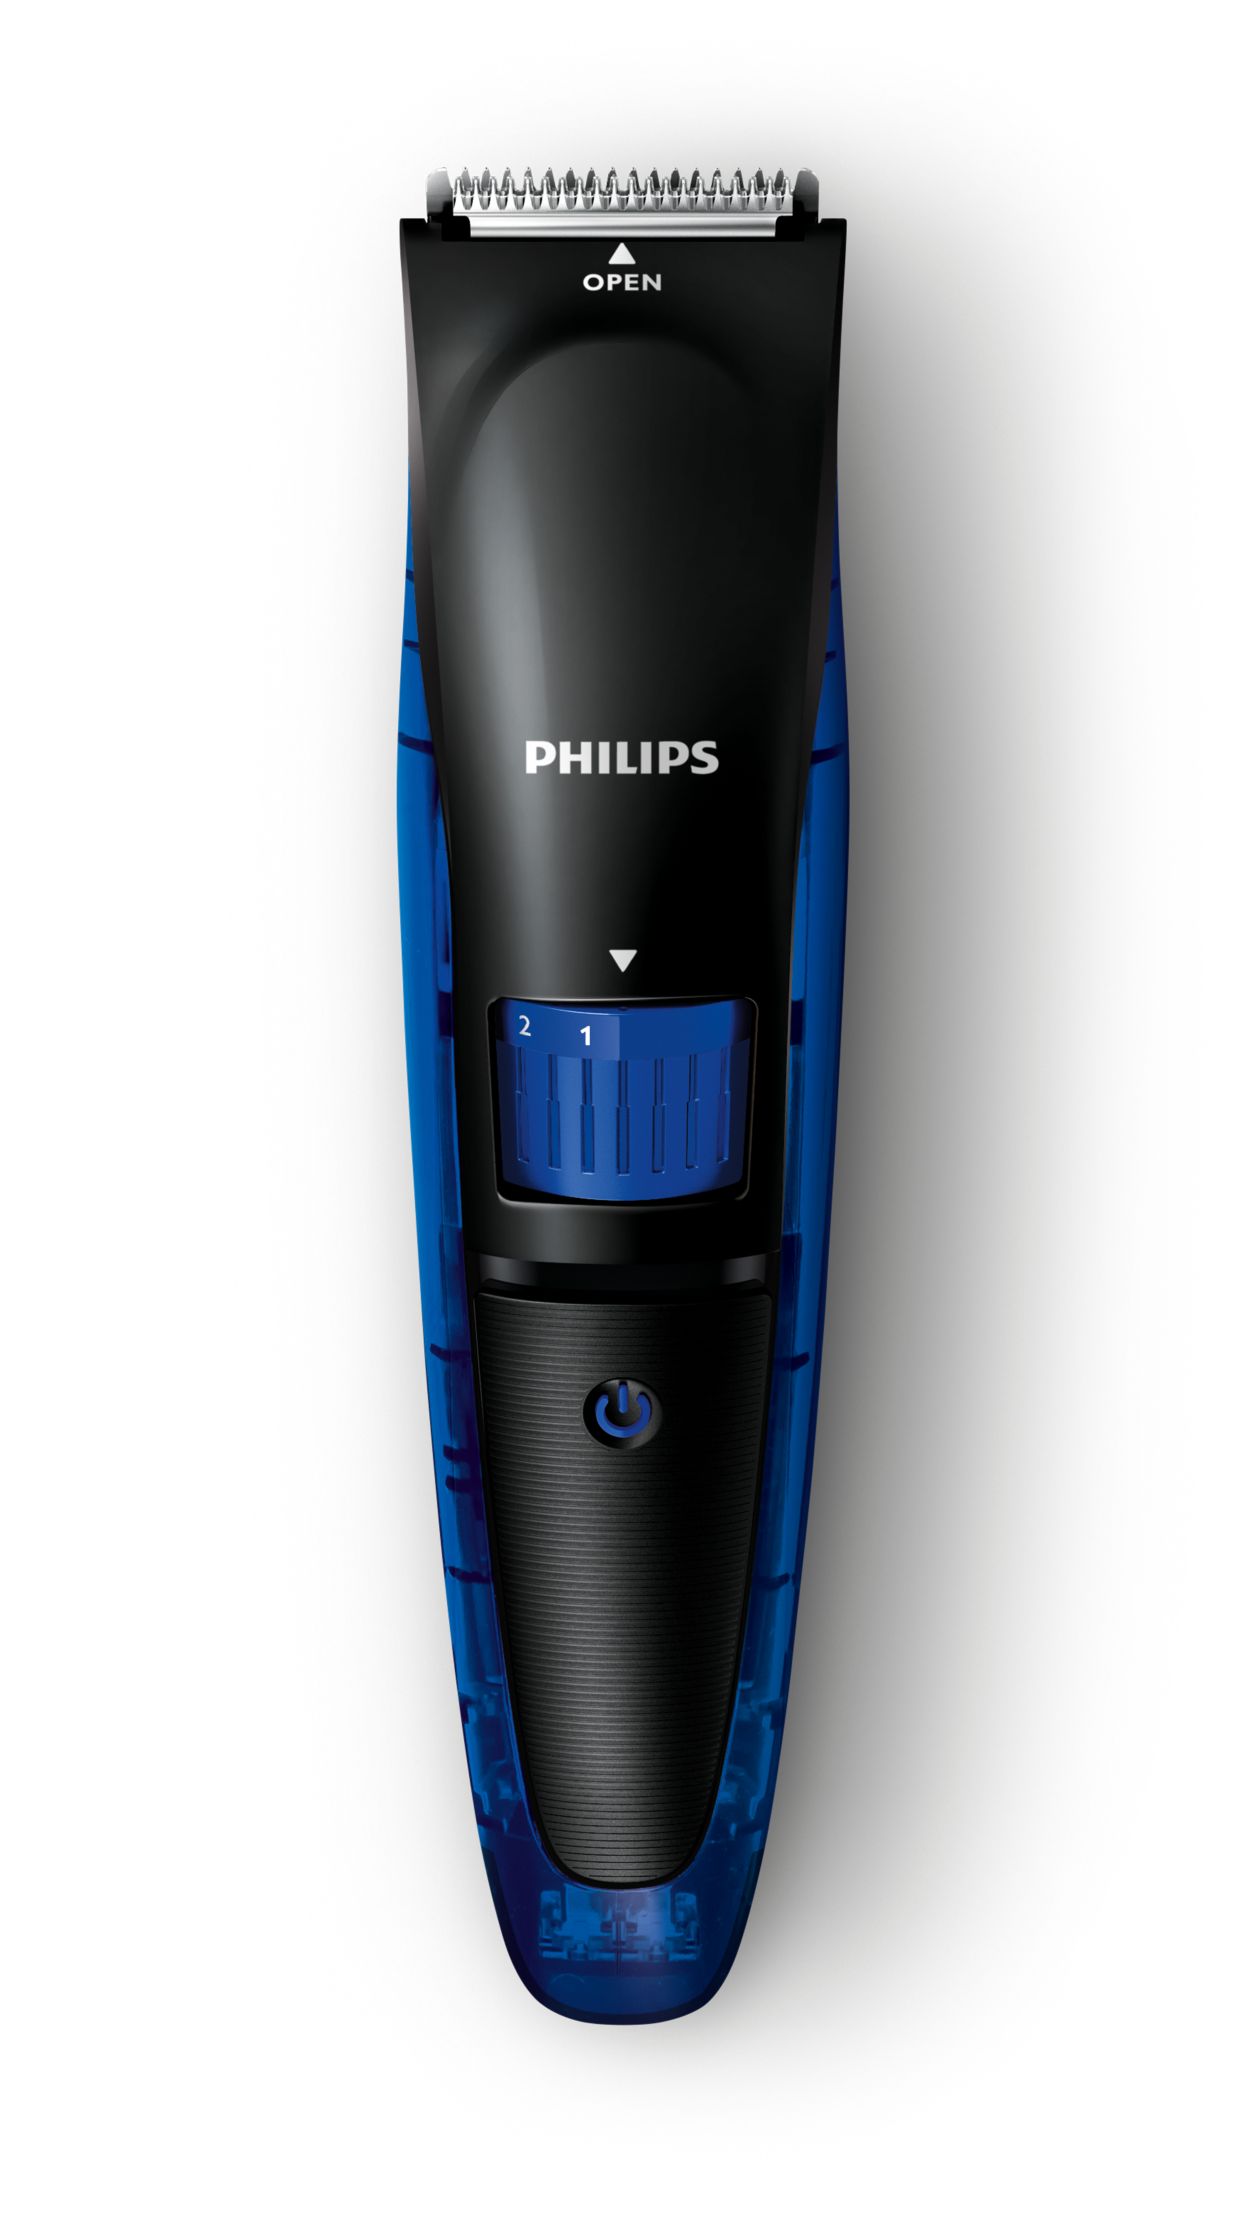 Philips nl9206ad купить. Филипс Сериес 3000. Philips nl9206ad. Триммер Филипс 6550 комплектация. Триммер Philips nl920bad.